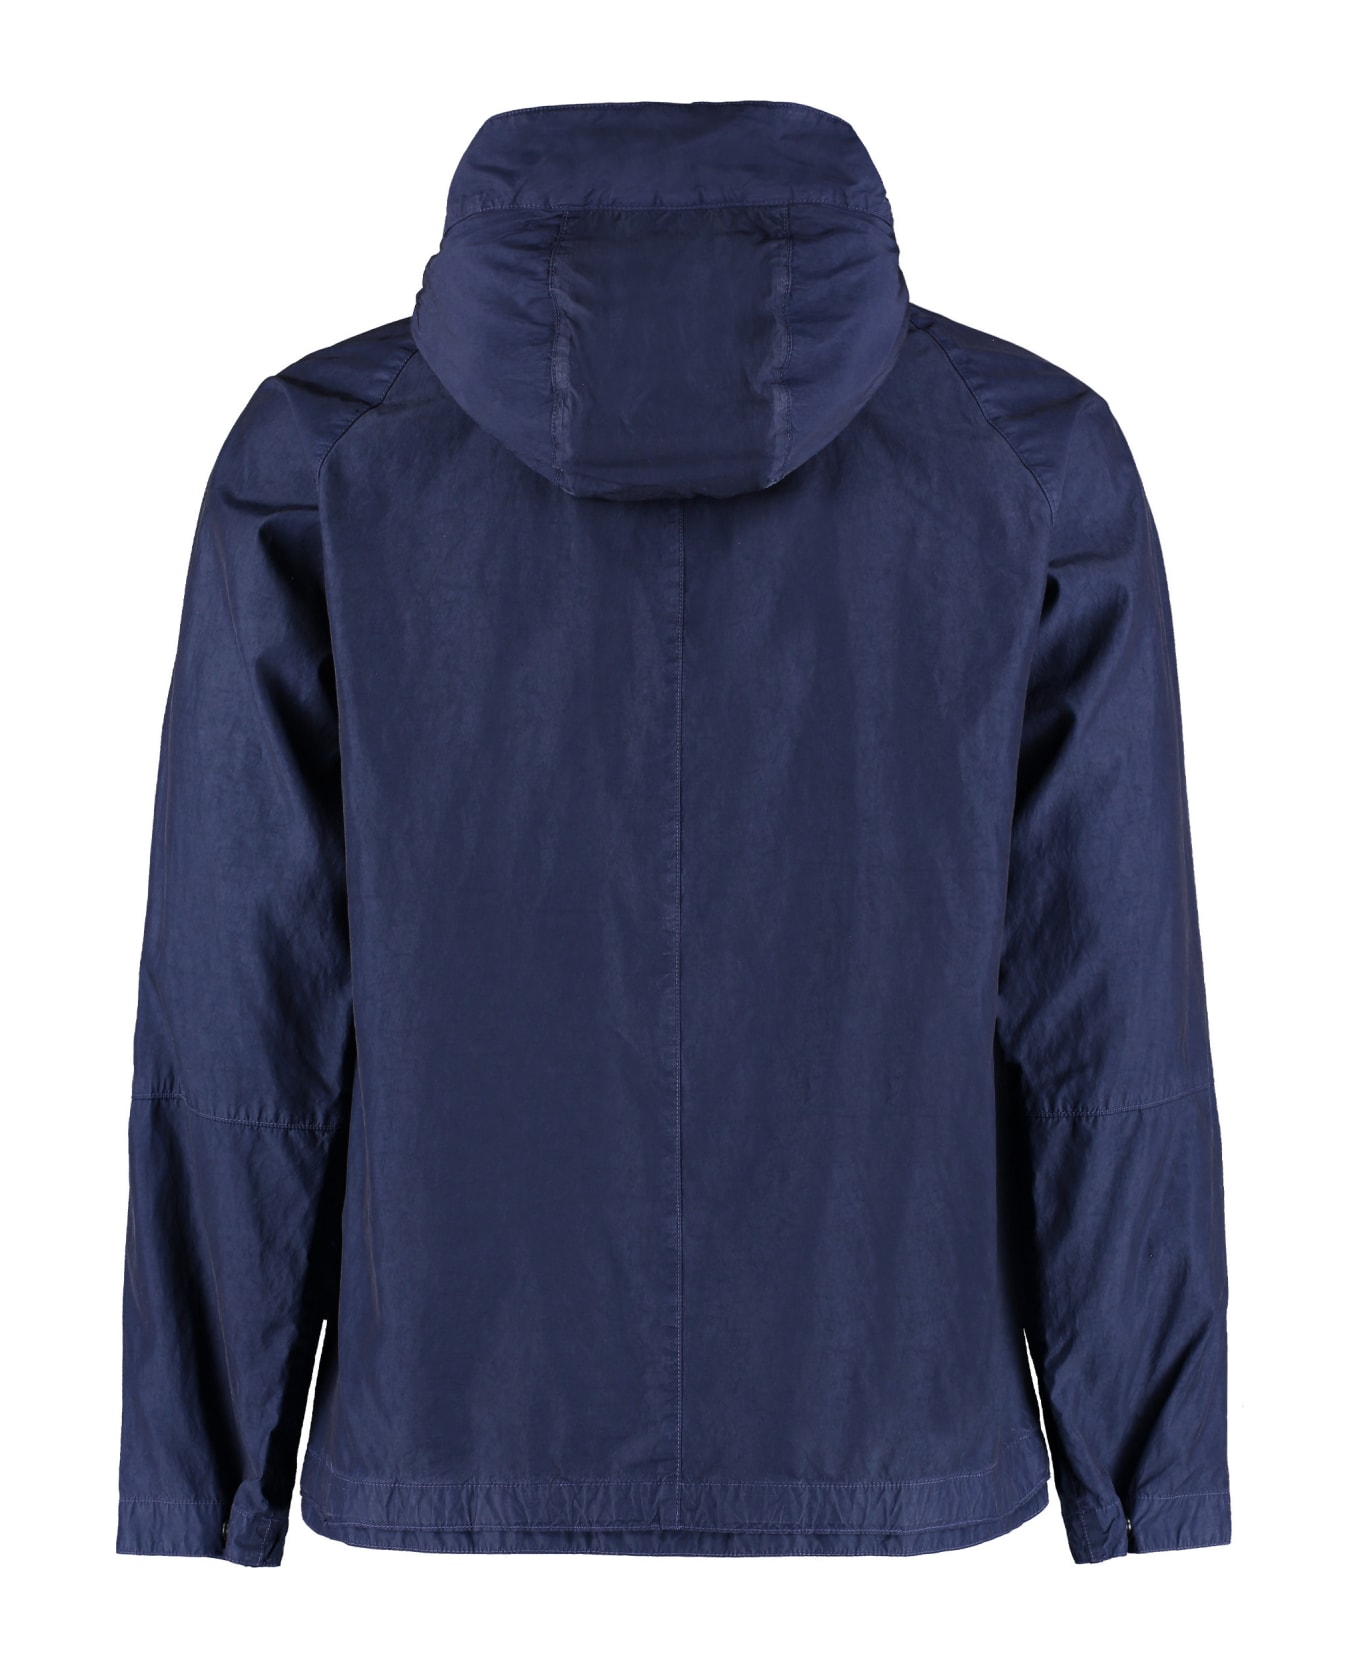 Stone Island Technical Fabric Hooded Jacket - blue